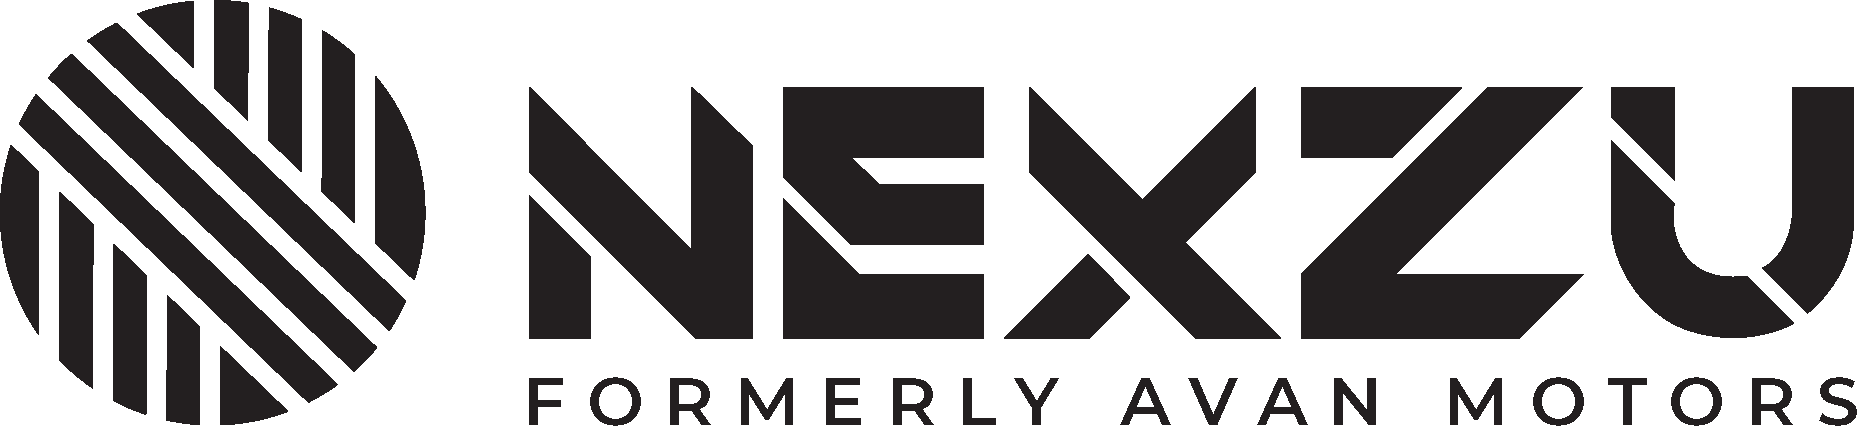 Nexzu Logo